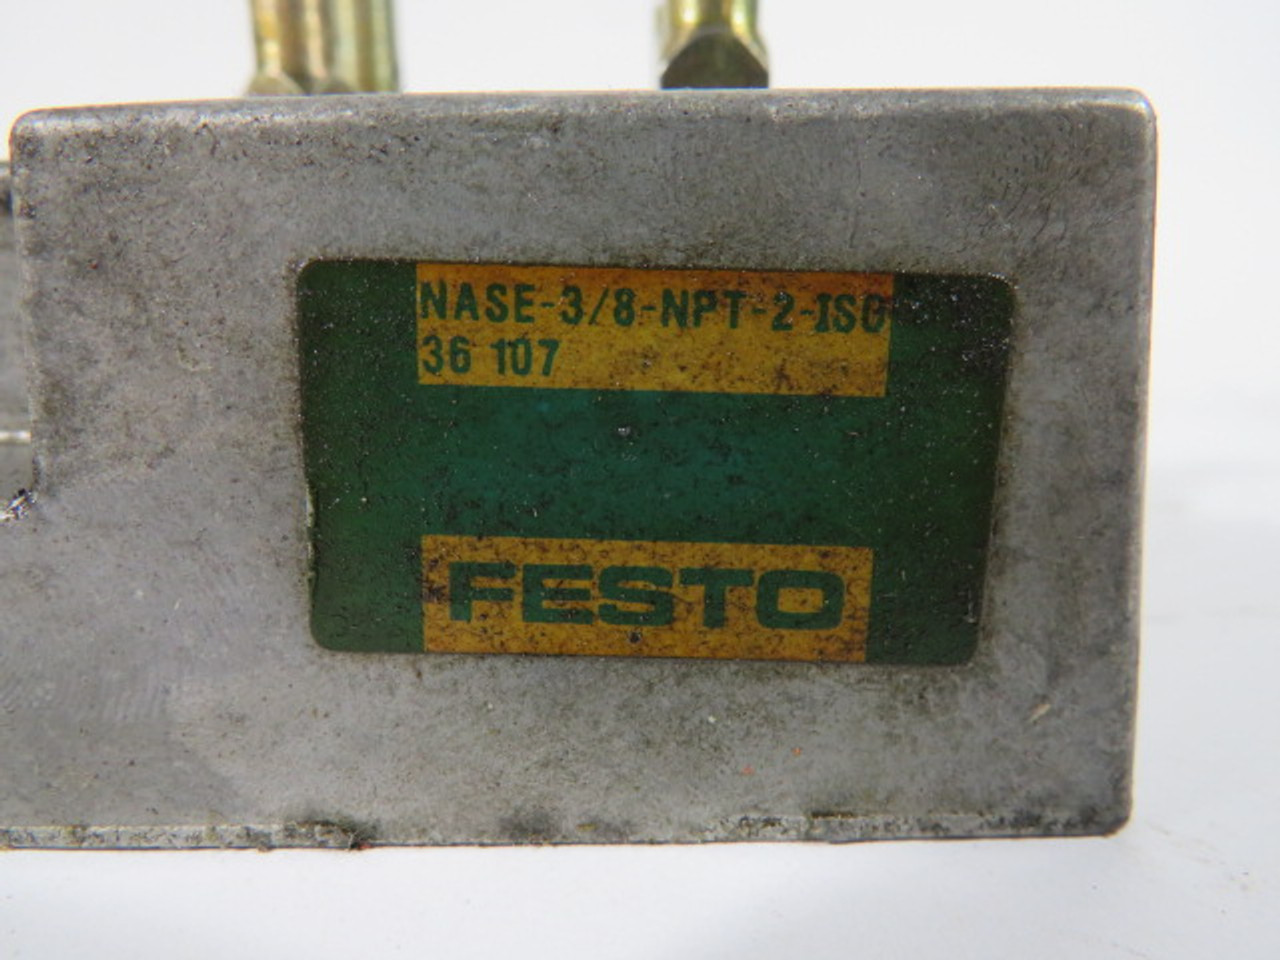 Festo NASE-3/8-NPT-2-ISO 36107 Solenoid Valve MISSING COVER USED